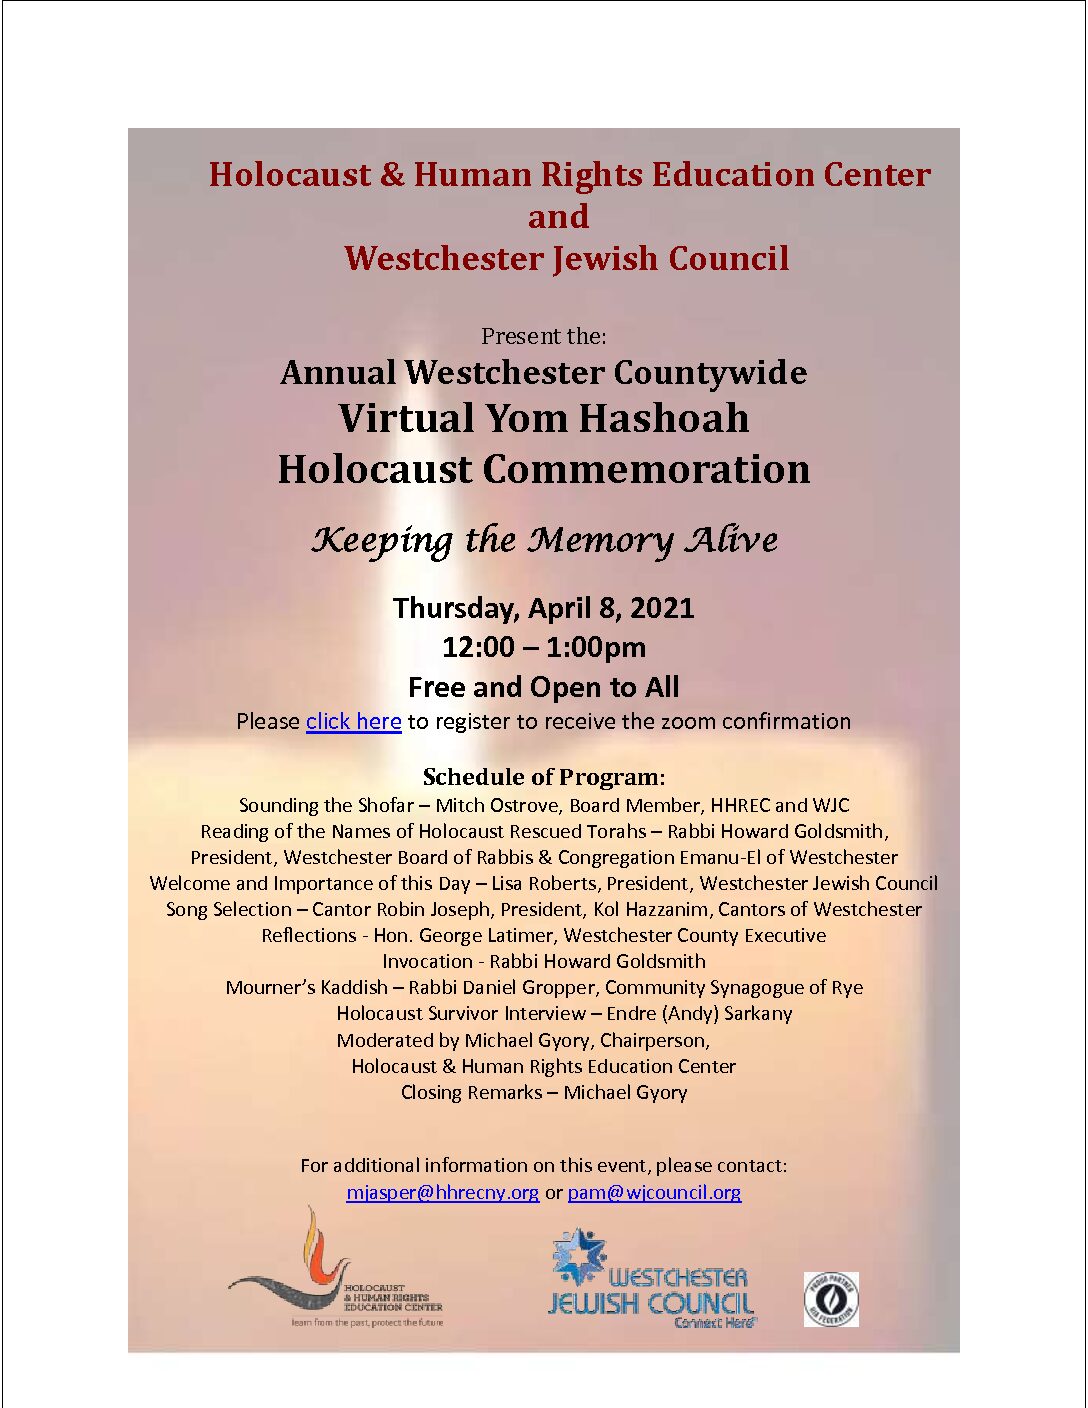 Yom Hashoah Community Virtual Commemoration with HHREC and Westchester Jewish Council